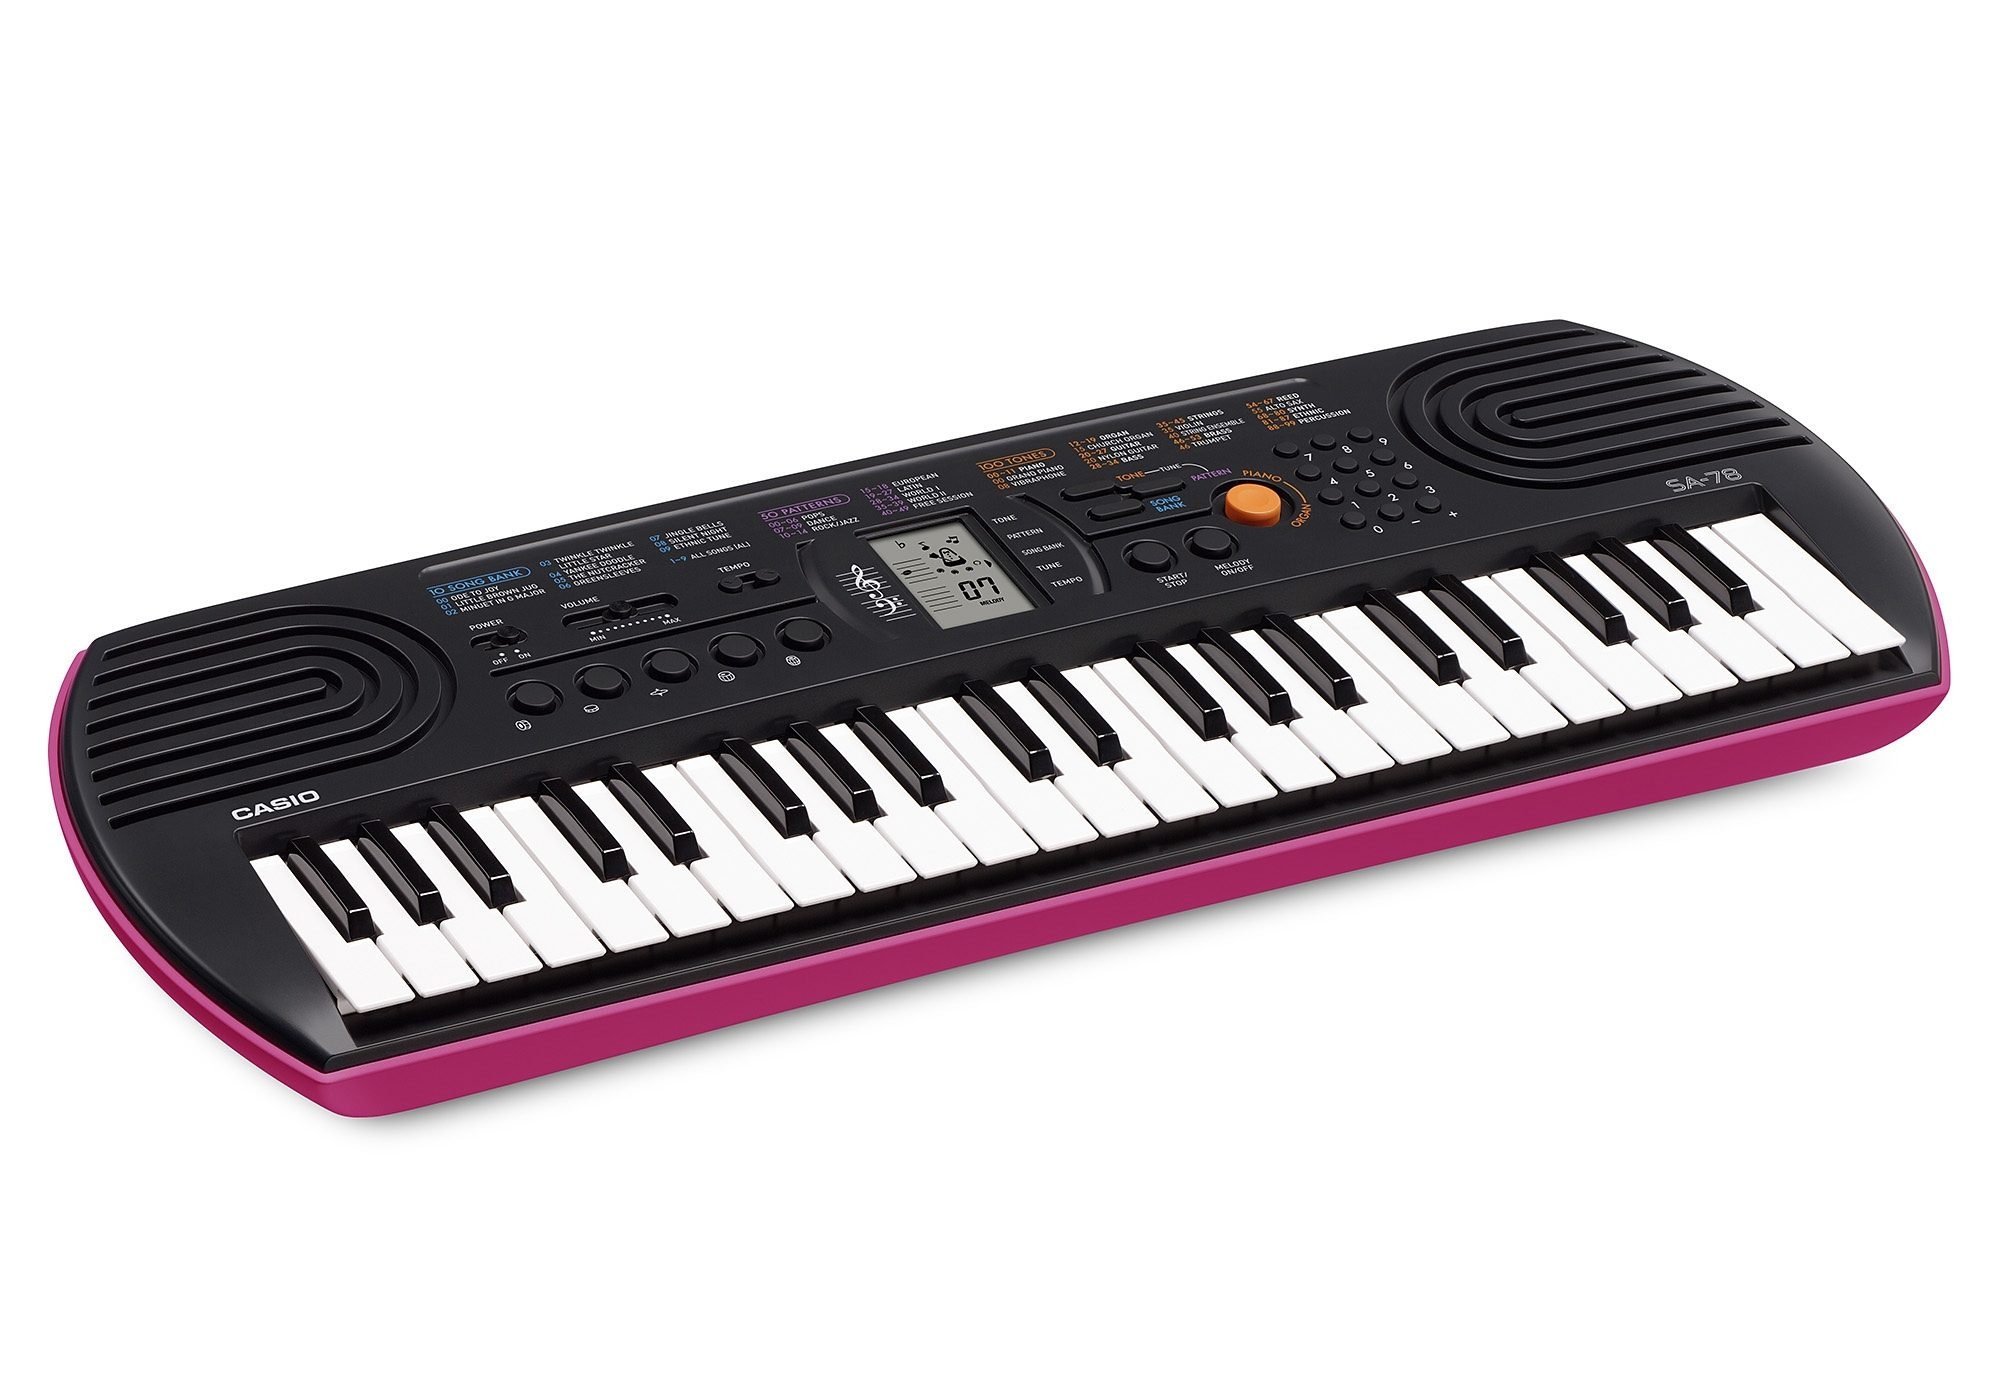 CASIO Home-Keyboard »Mini-Keyboard SA-78«, mit 44 Minitasten